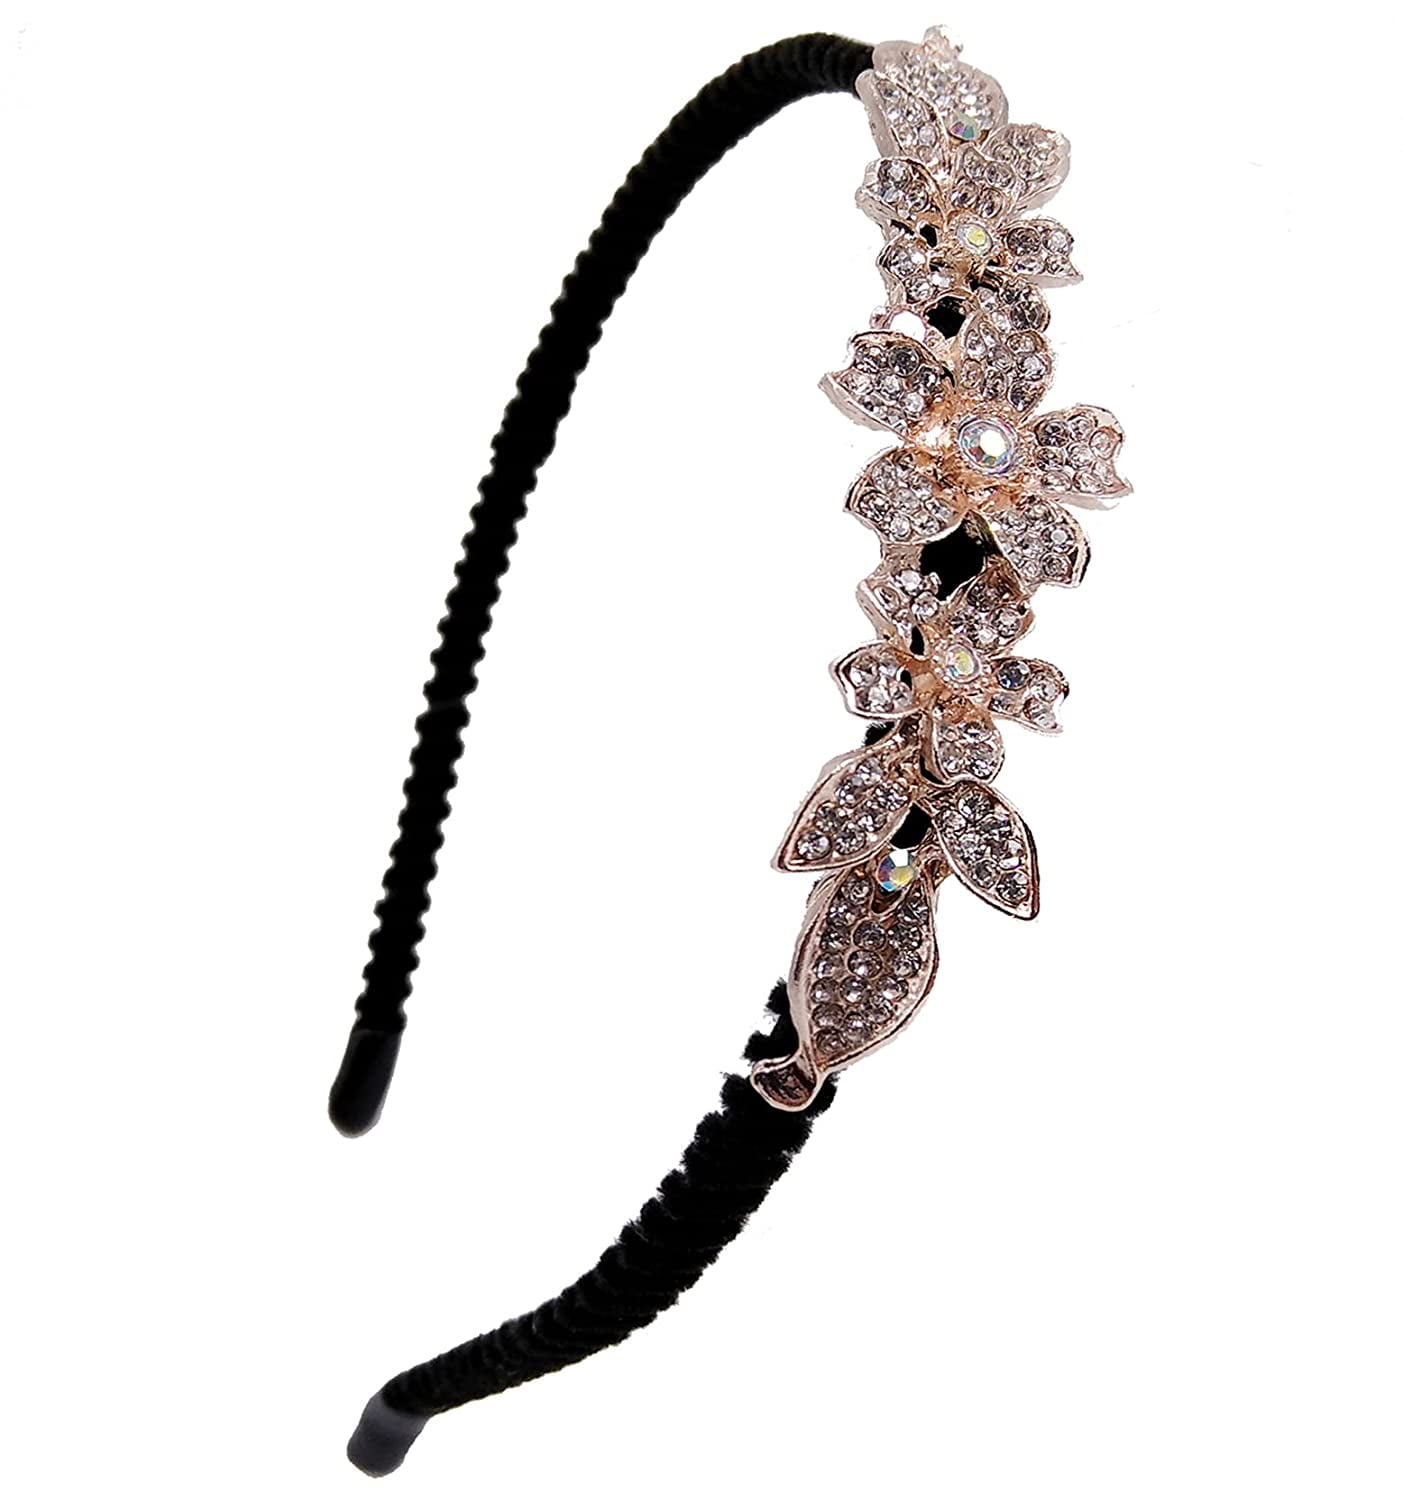 Fashion Wedding Birthday Crystal Pearl S Headband Hair Accessories Head Wear Hoop For Women,G